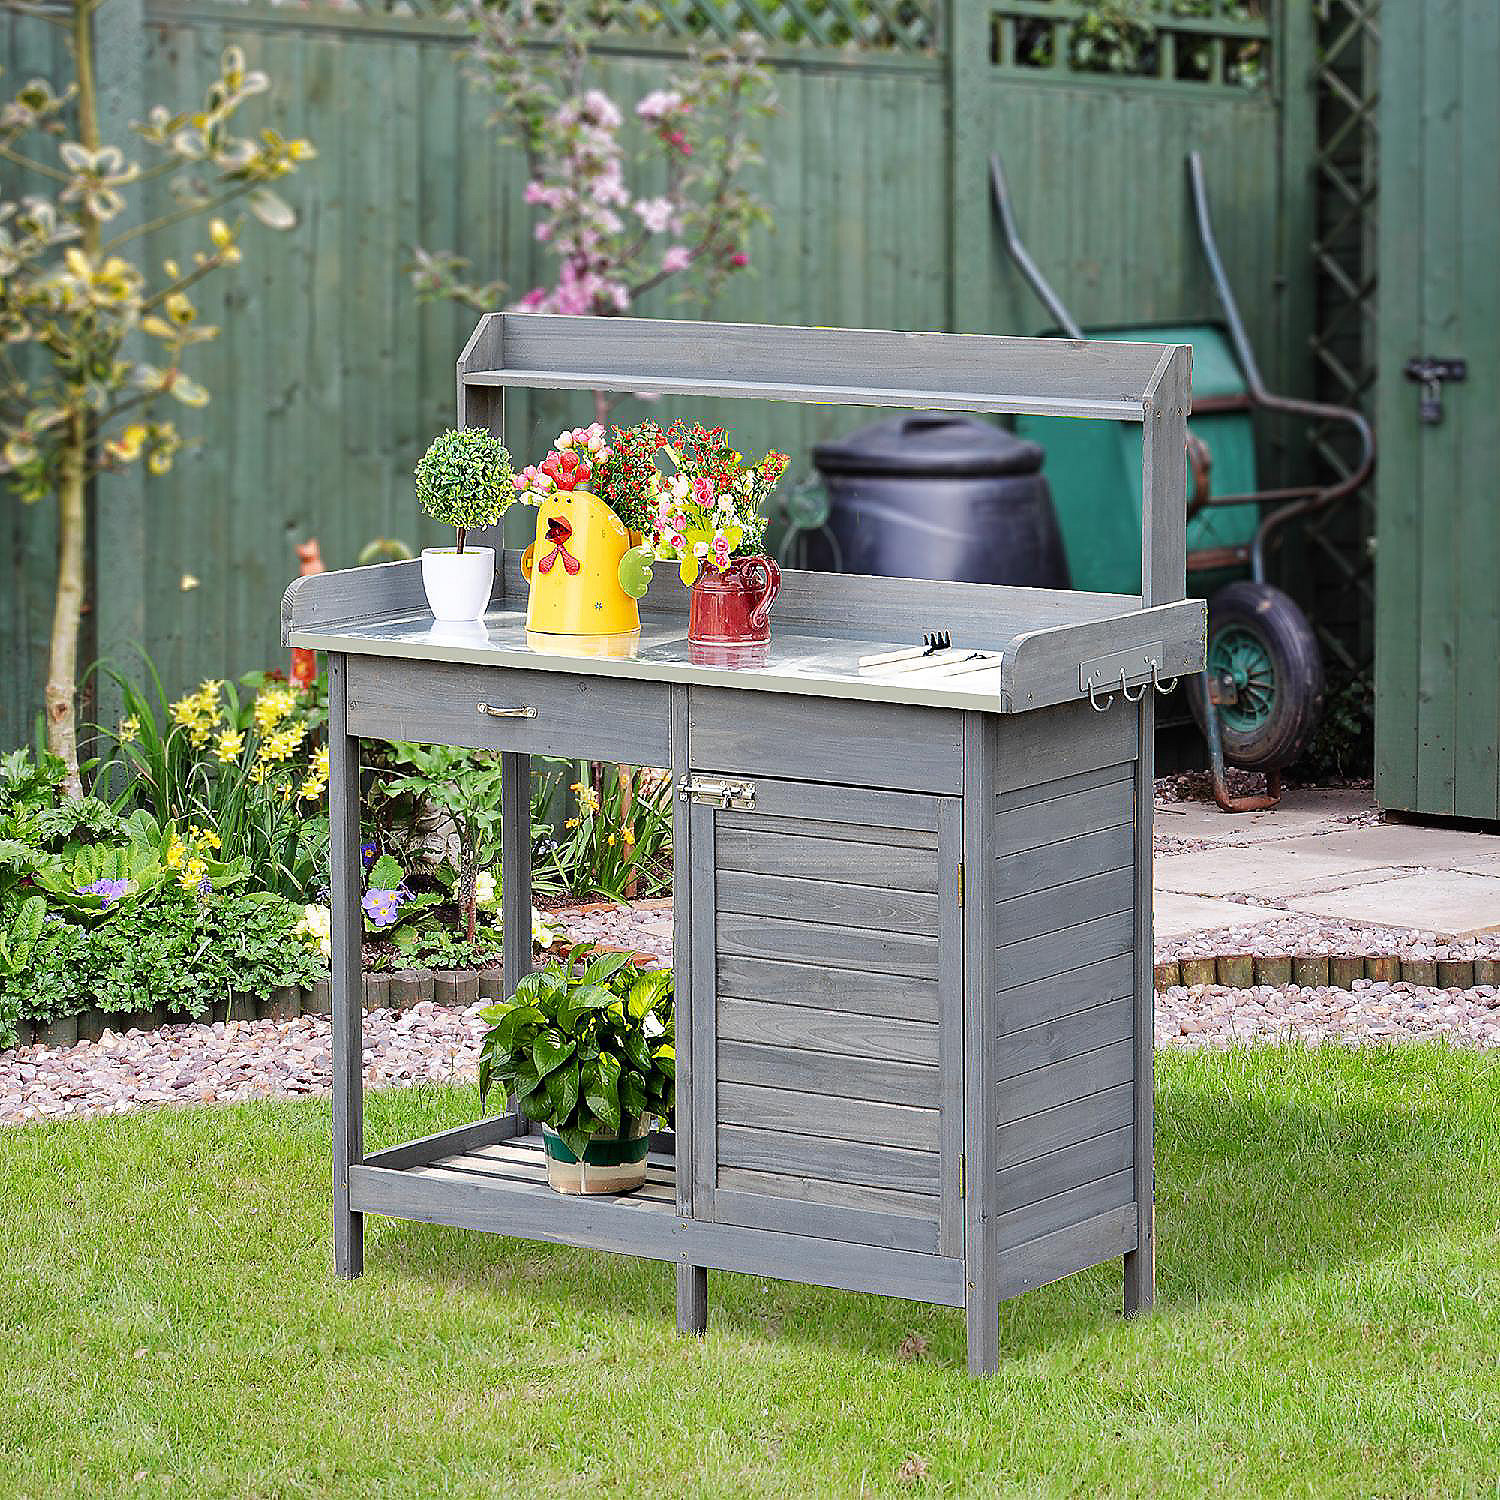 NEW Fir wood Outdoor Garden Potting Bench Metal Tabletop W/Cabinet Work Station 